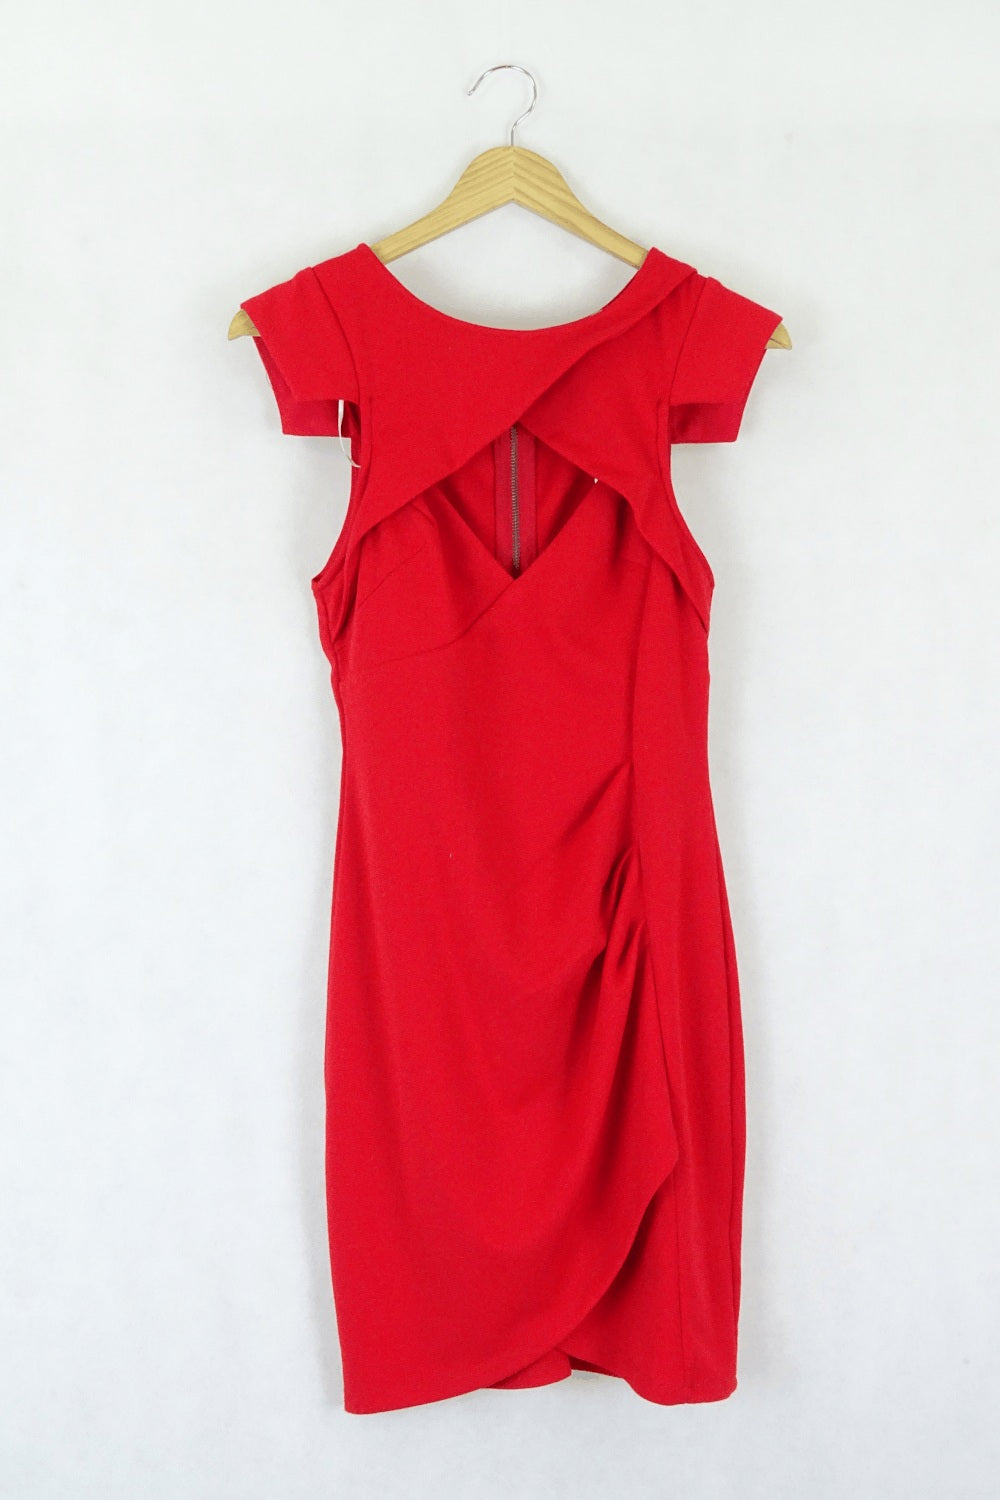 Paradisco Red Dress 8